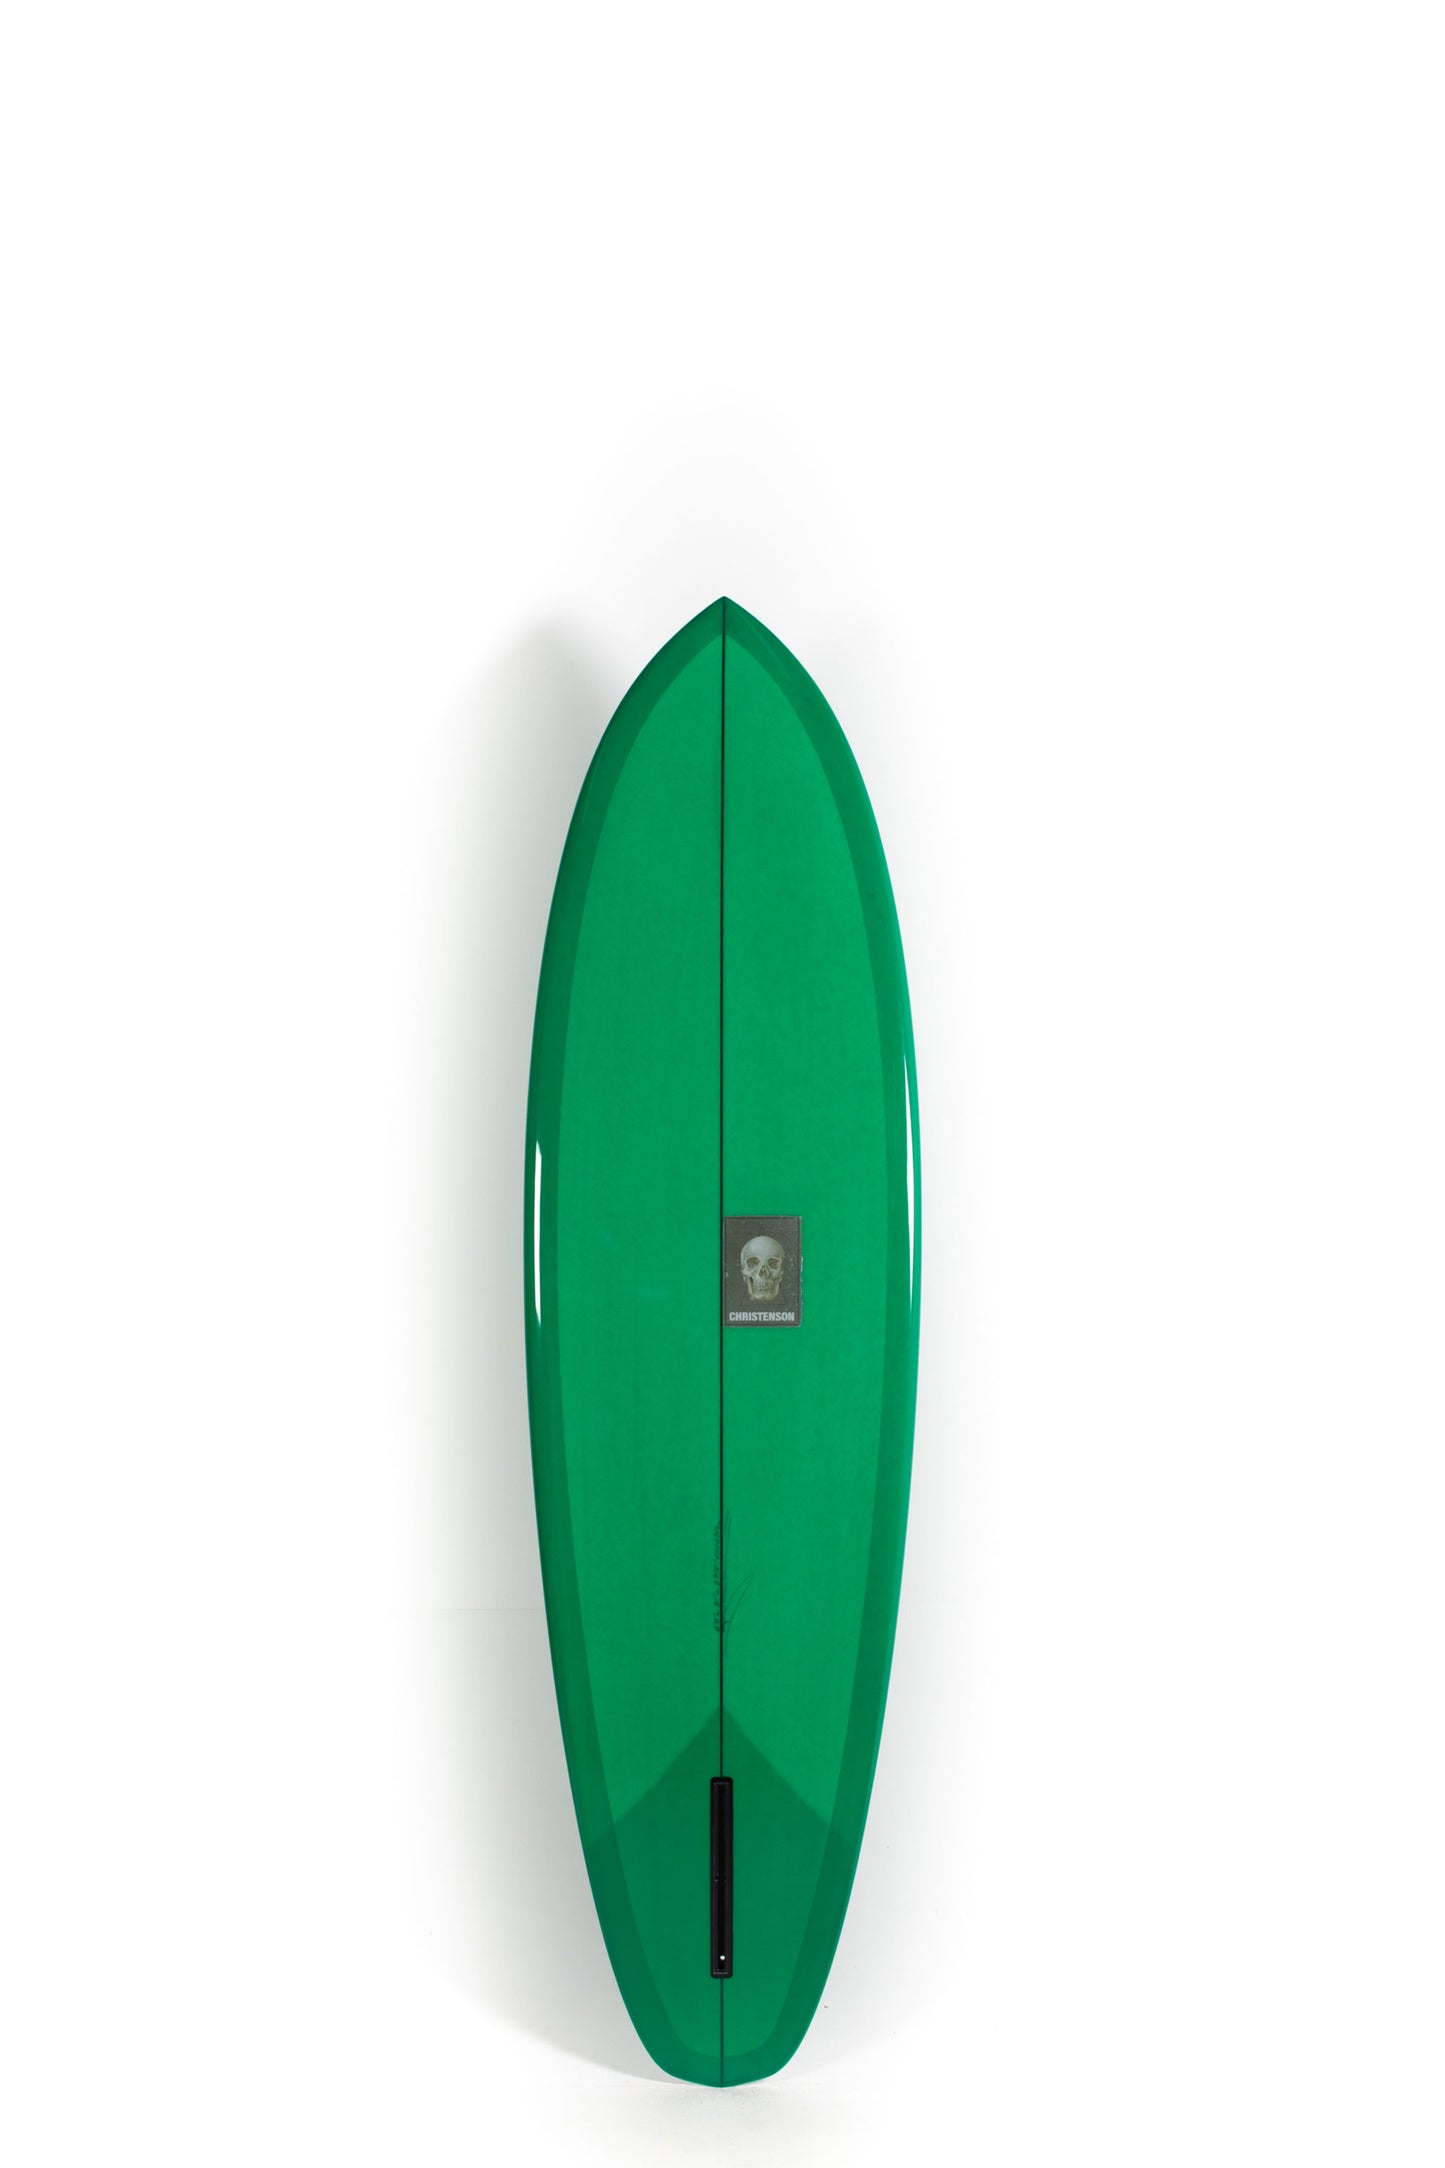 Pukas Surf Shop - Christenson Surfboards - ULTRA TRACKER - 6'8" x 21 x 2 3/4 - CX04702